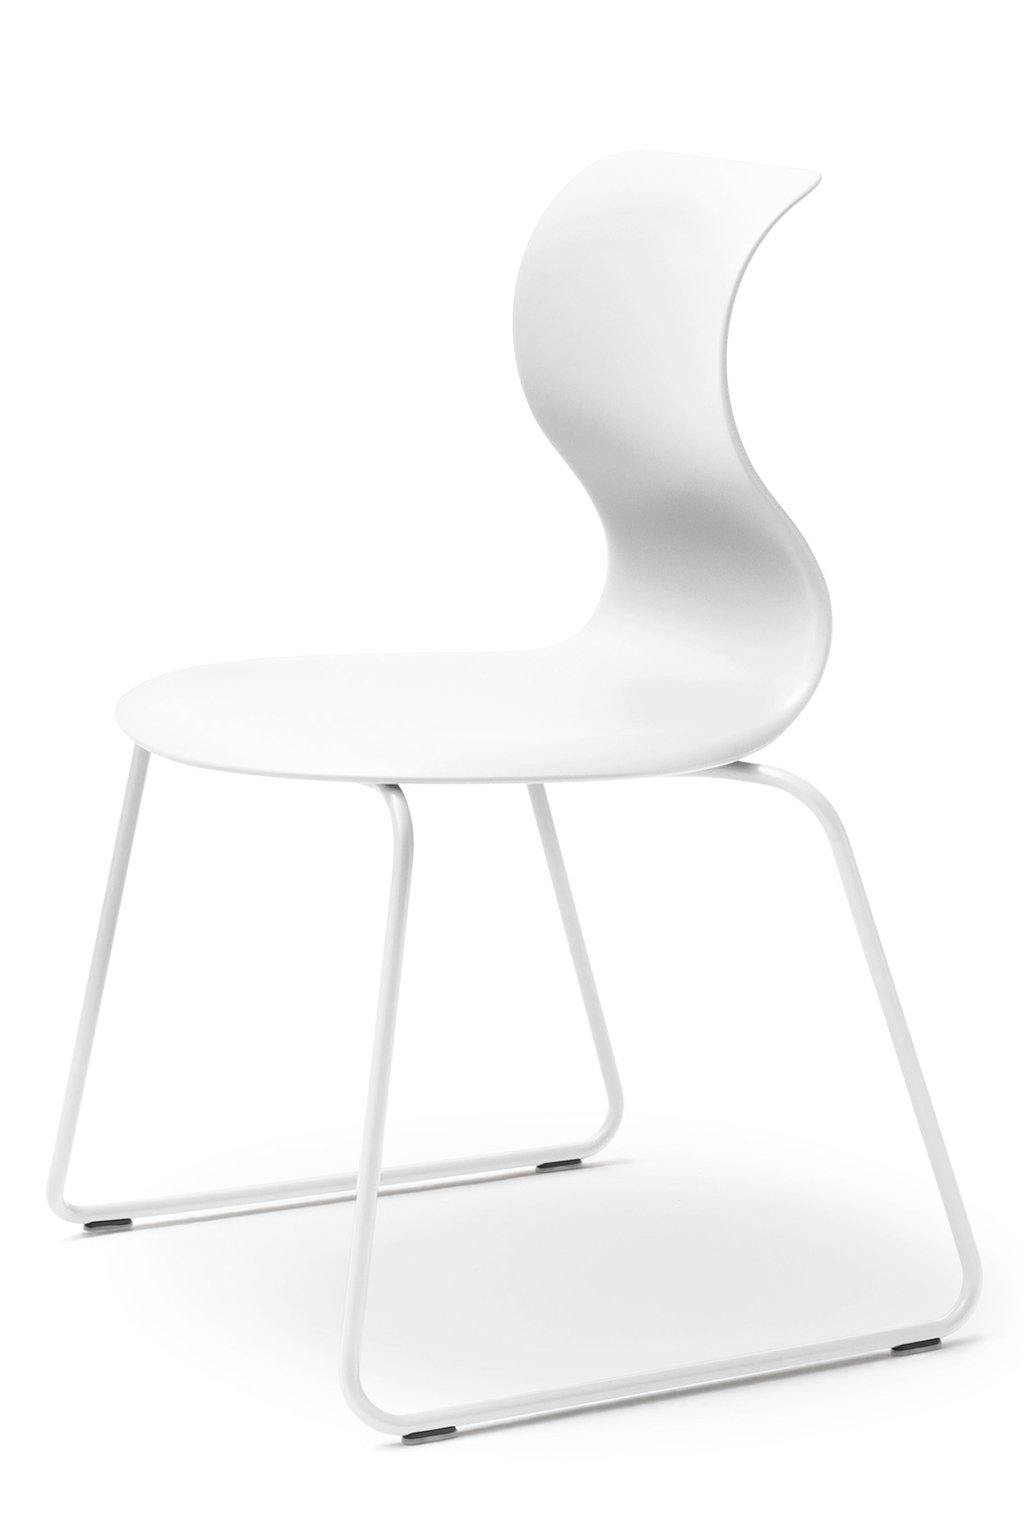 pro chair skid frame